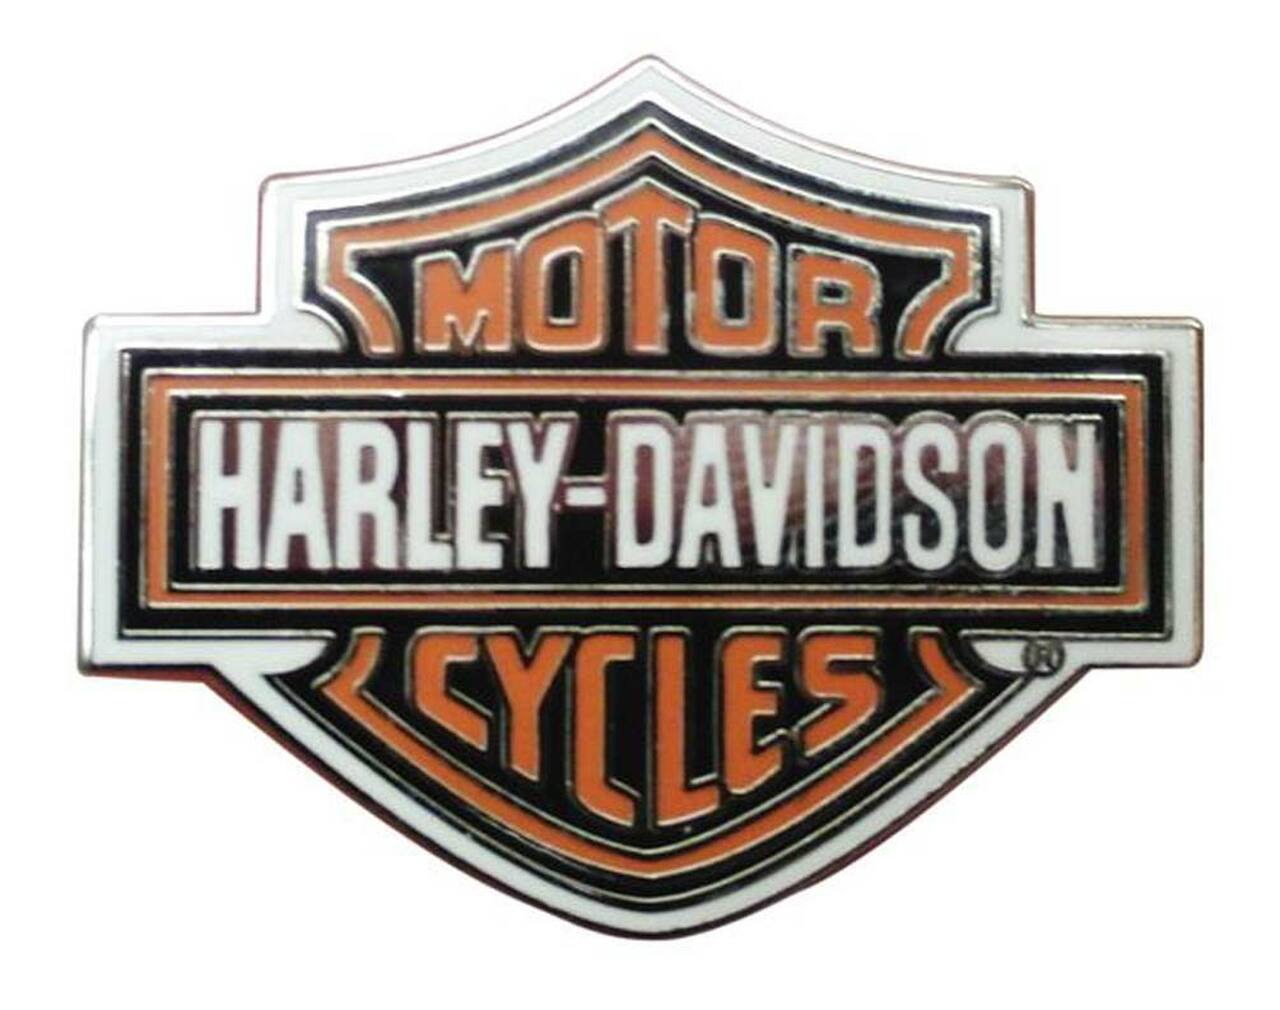 Значок Harley-Davidson